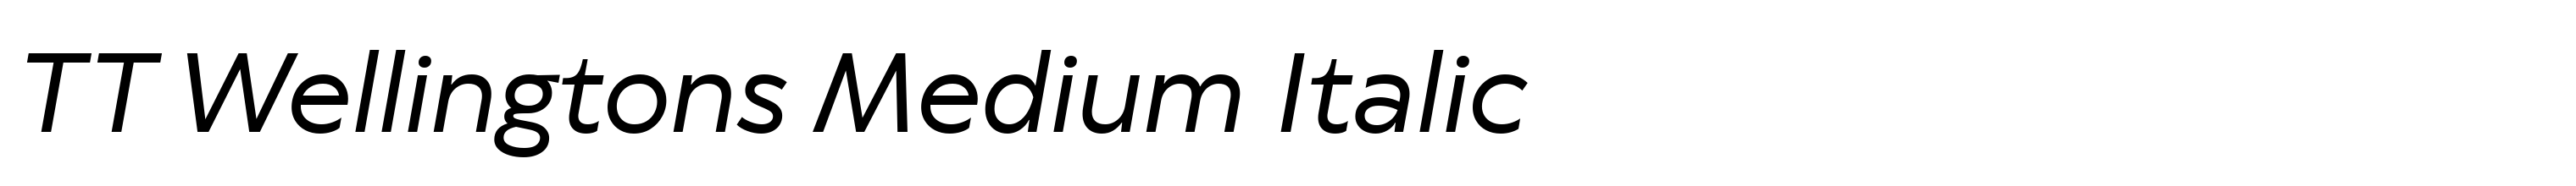 TT Wellingtons Medium Italic